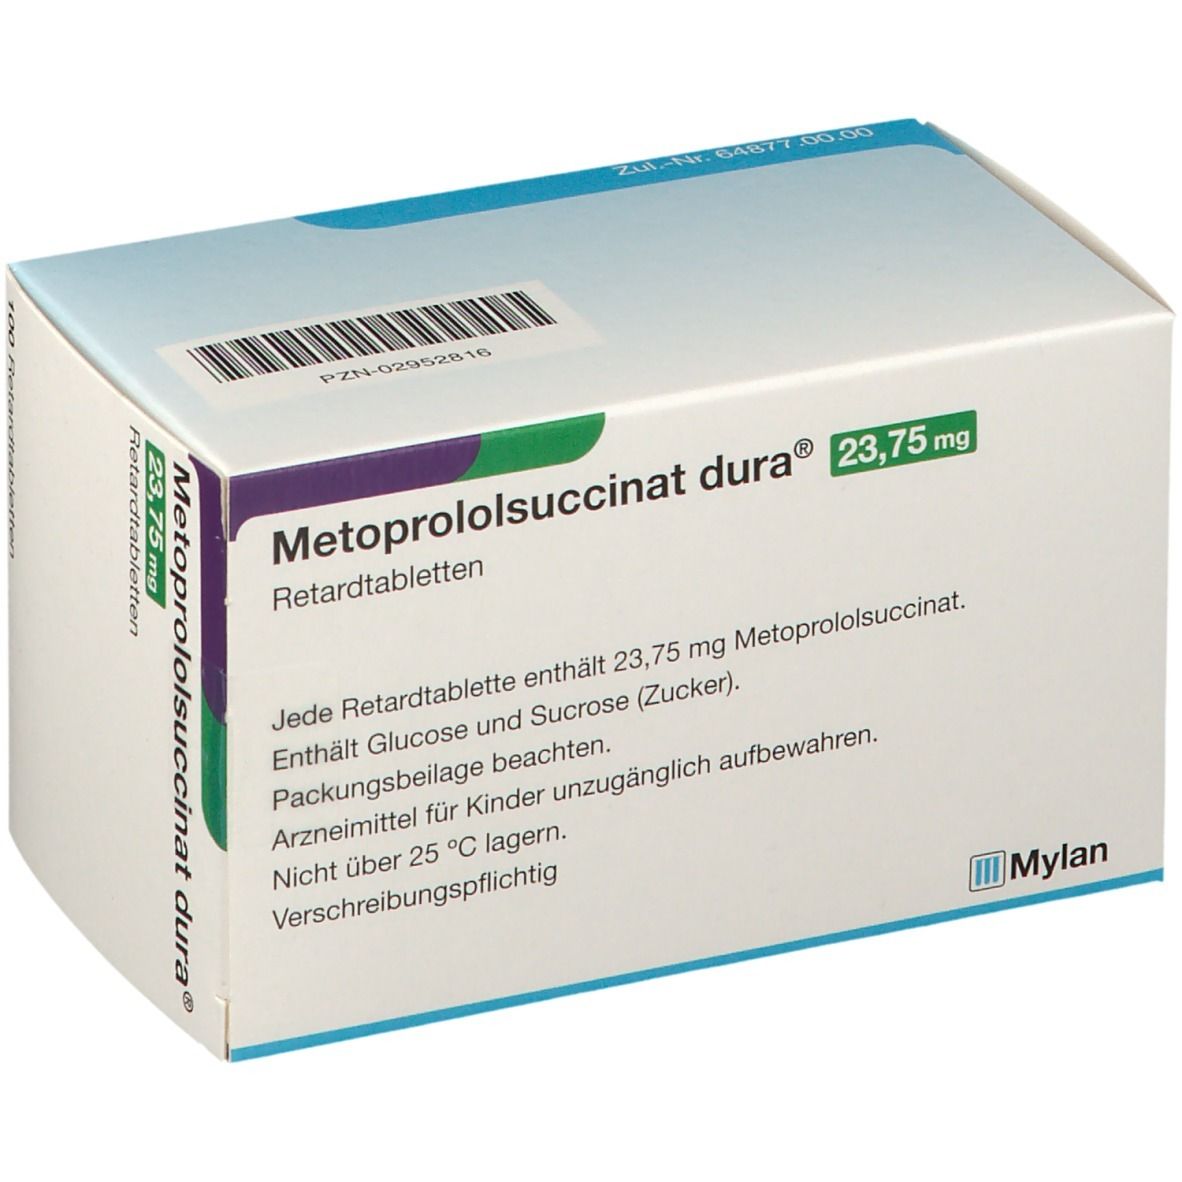 Metoprololsuccinat dura® 23,75 mg